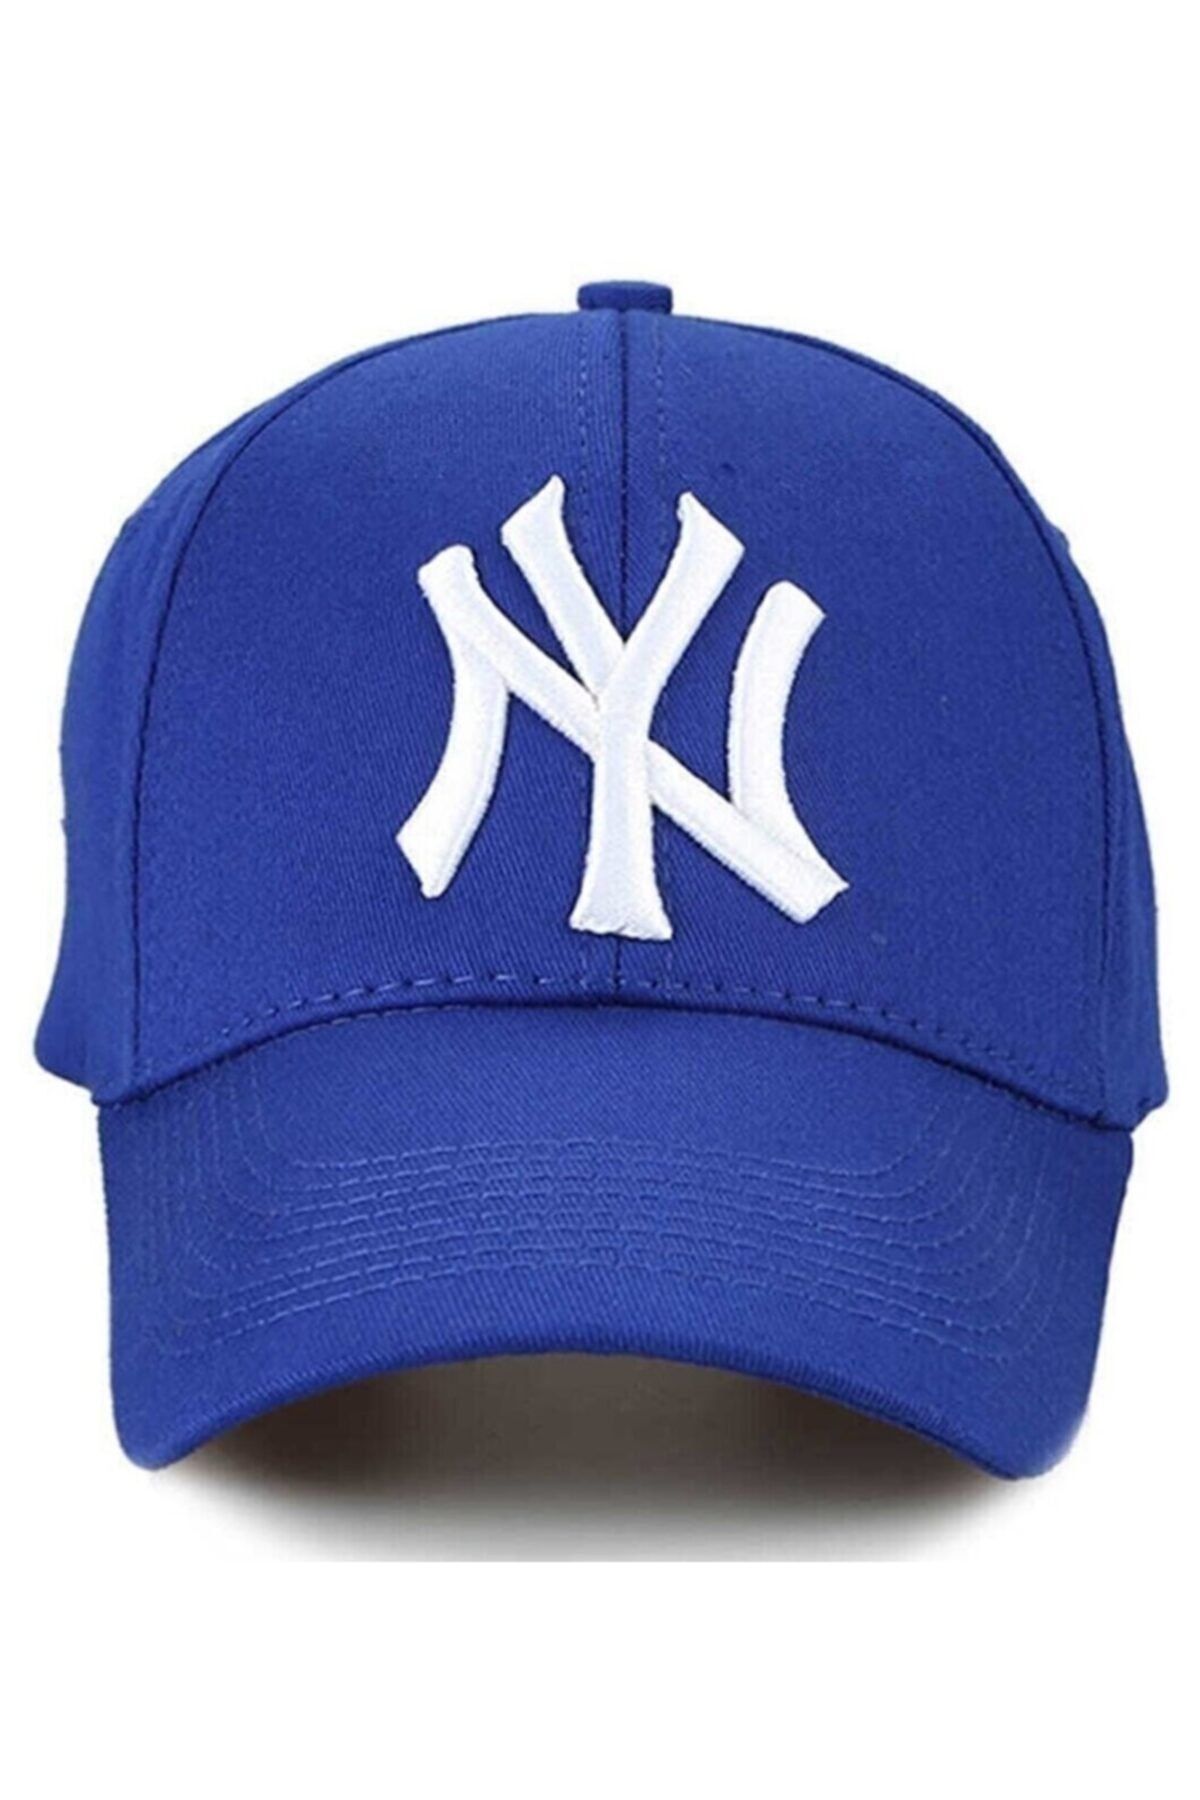 Genel Markalar Ny New York Şapka Unisex Saks Mavi Şapka